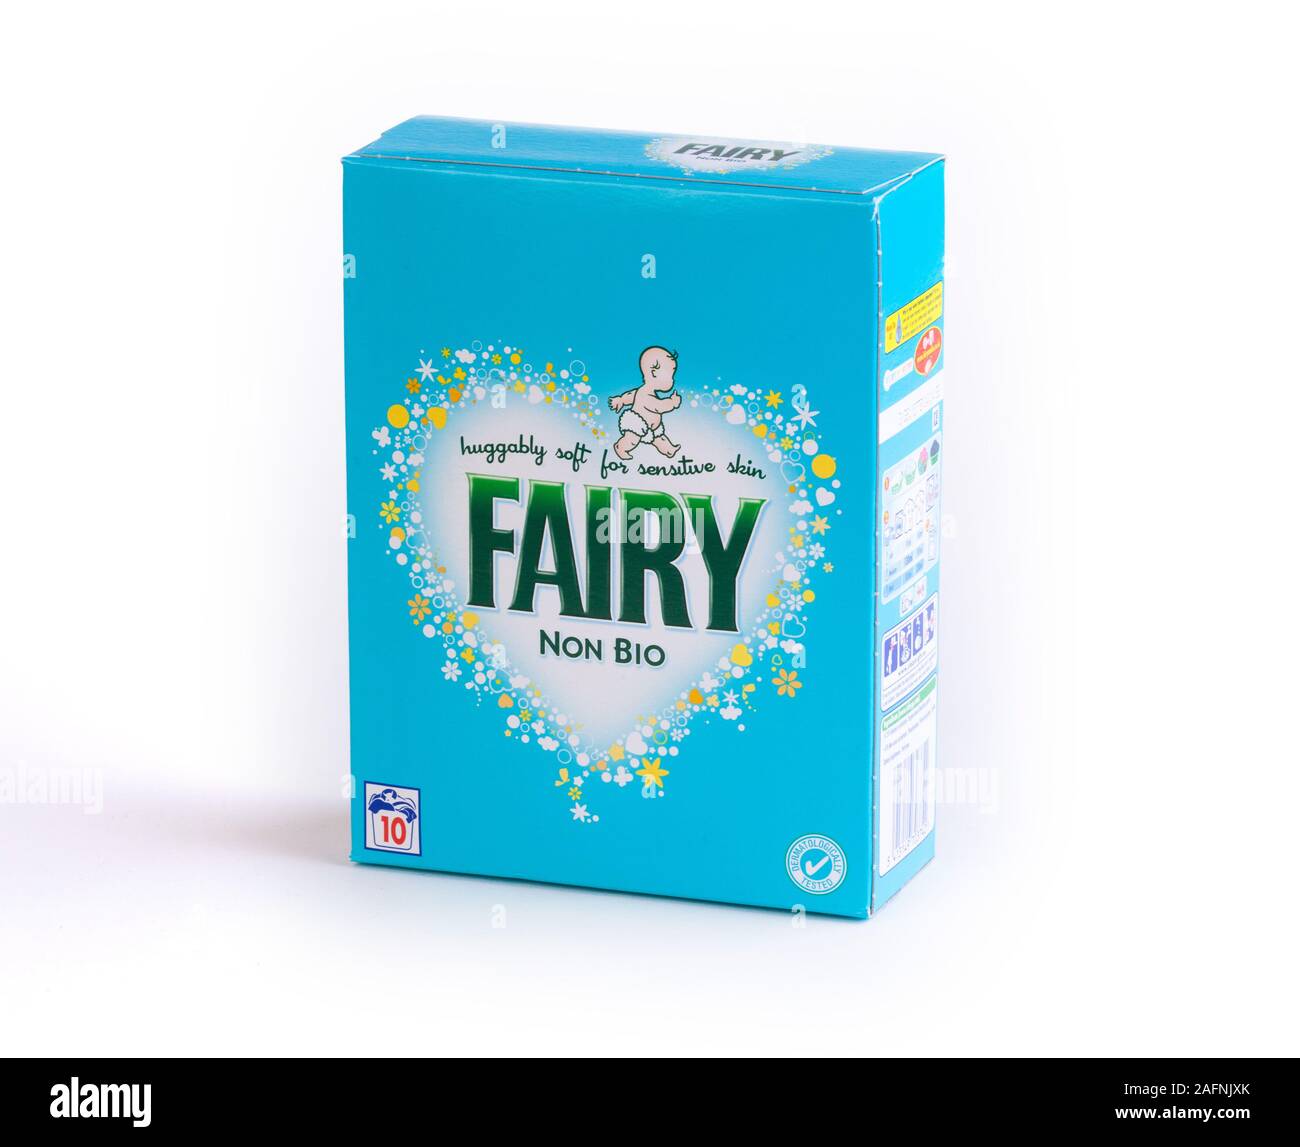 Fairy non bio washing powder made by Procter & Gamble Stock Photo